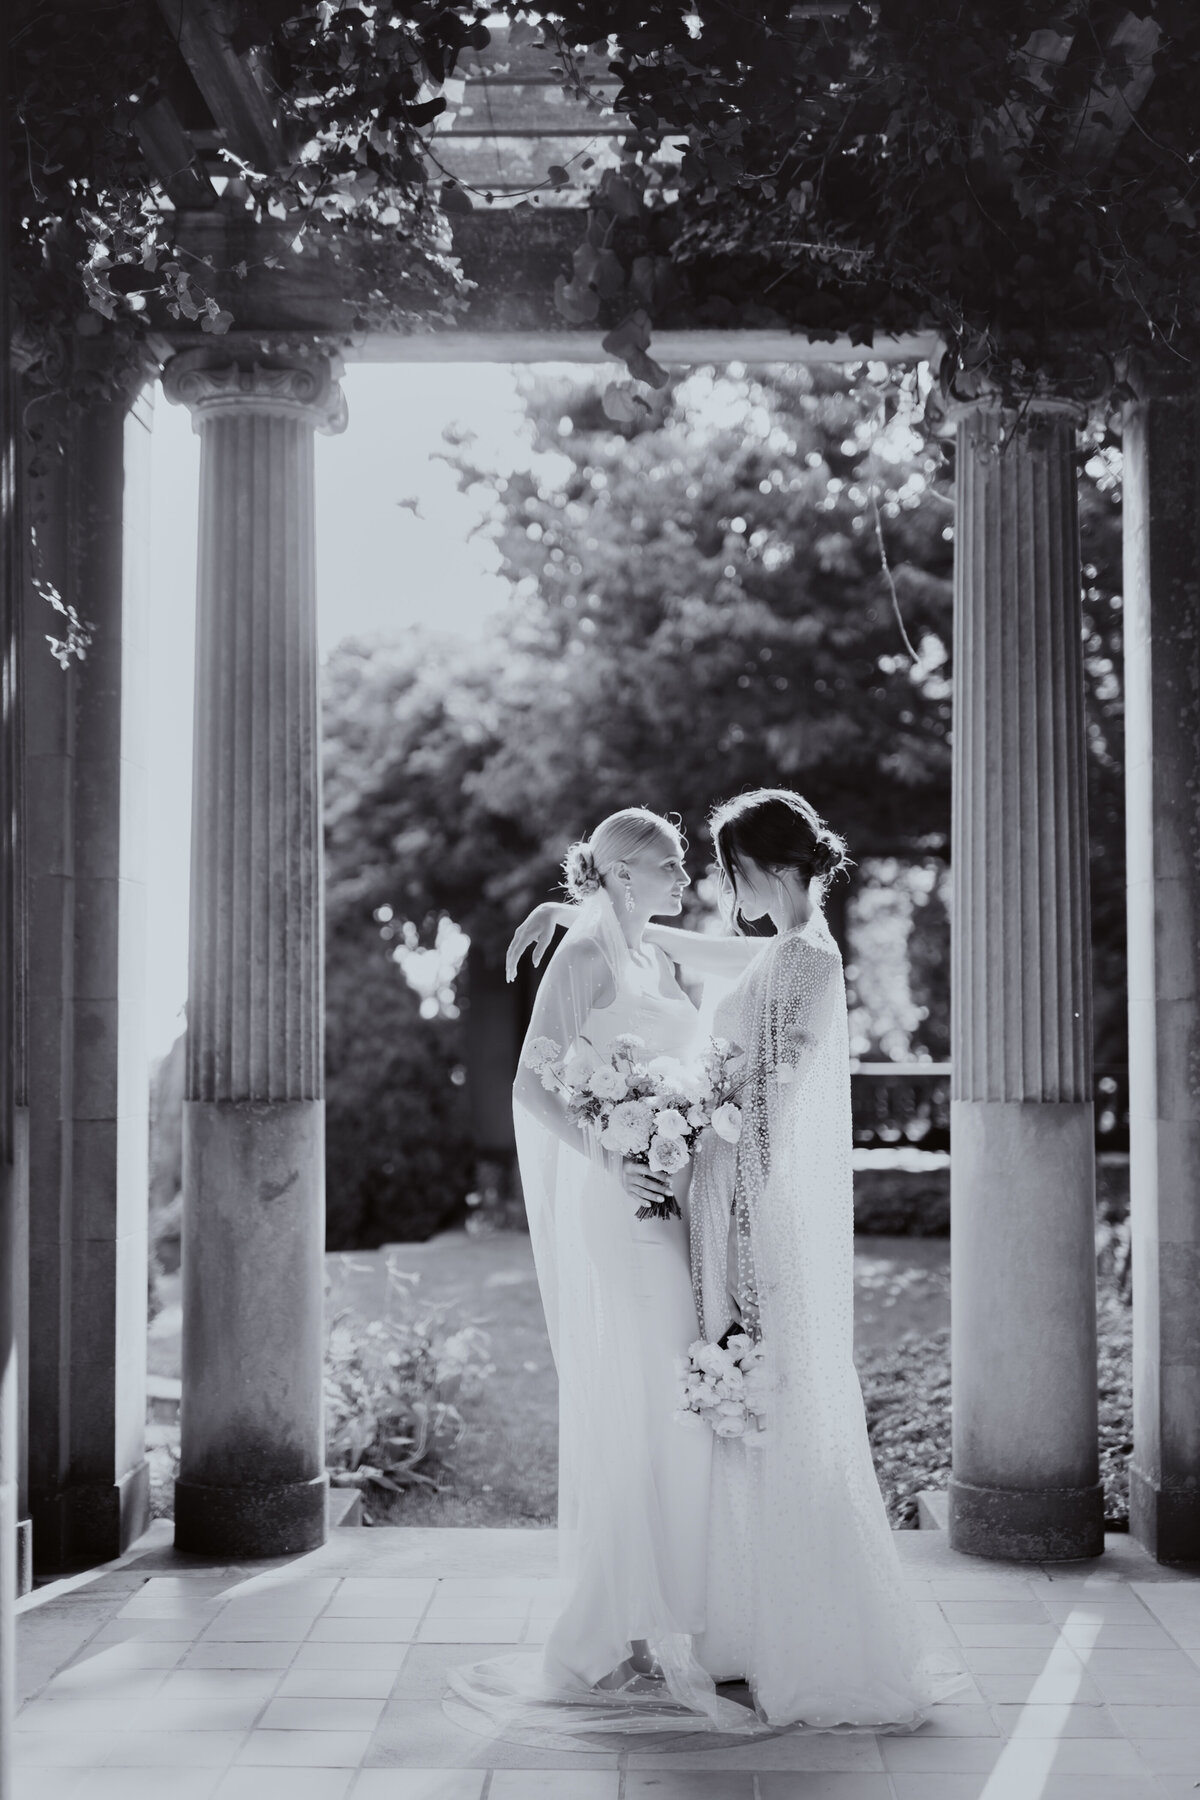 lqbtq-wedding-harkness-ct-black-white-photography-sarah-brehant-events